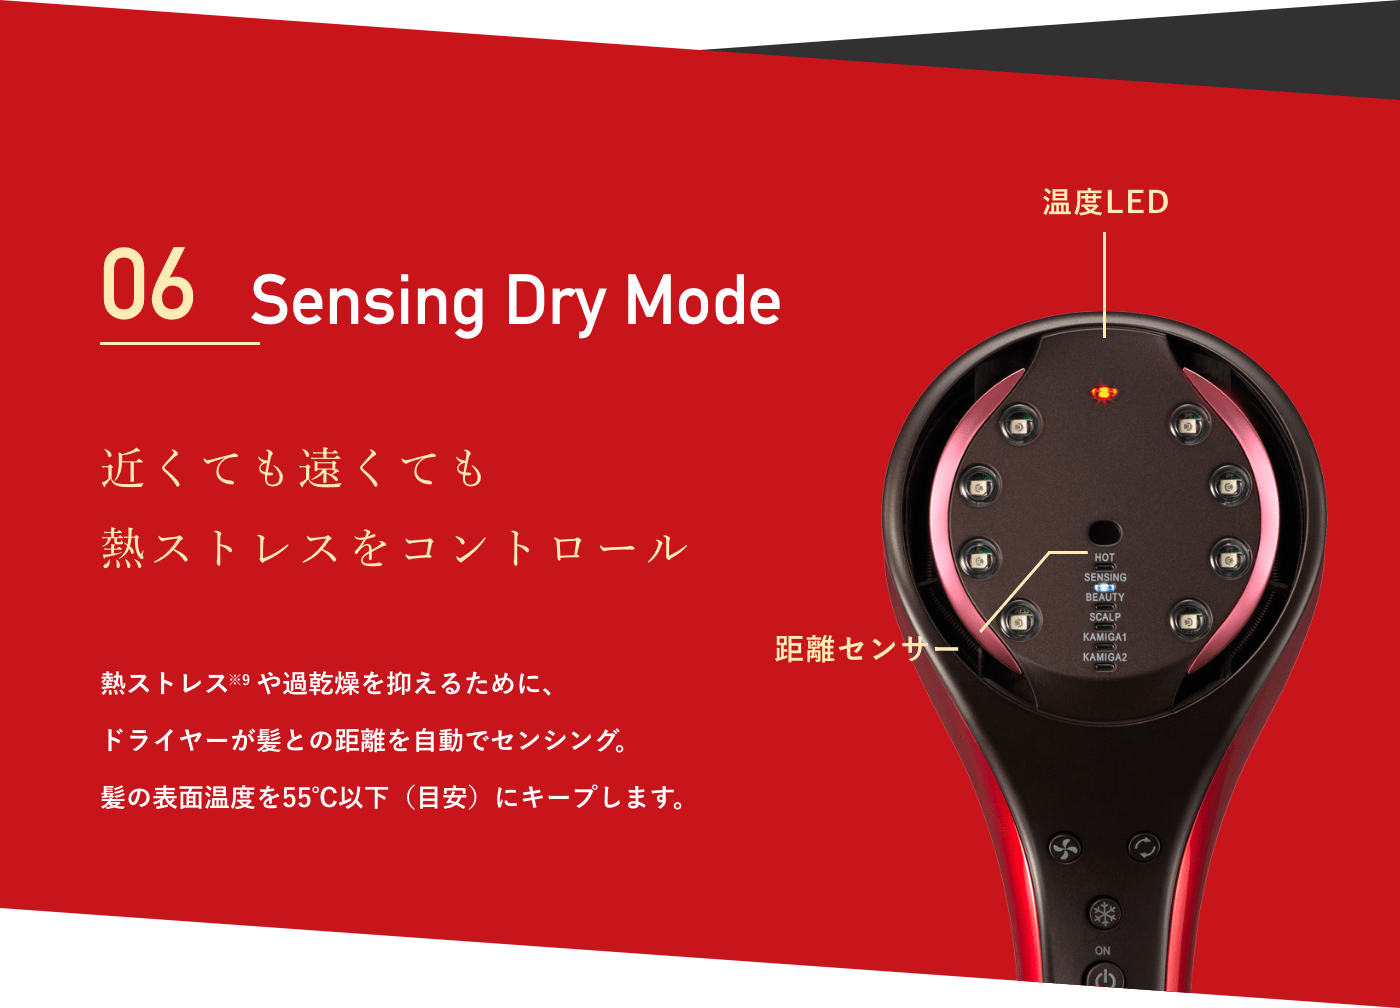 Sensing Dry Mode 近くても遠くても熱ストレスをコントロール